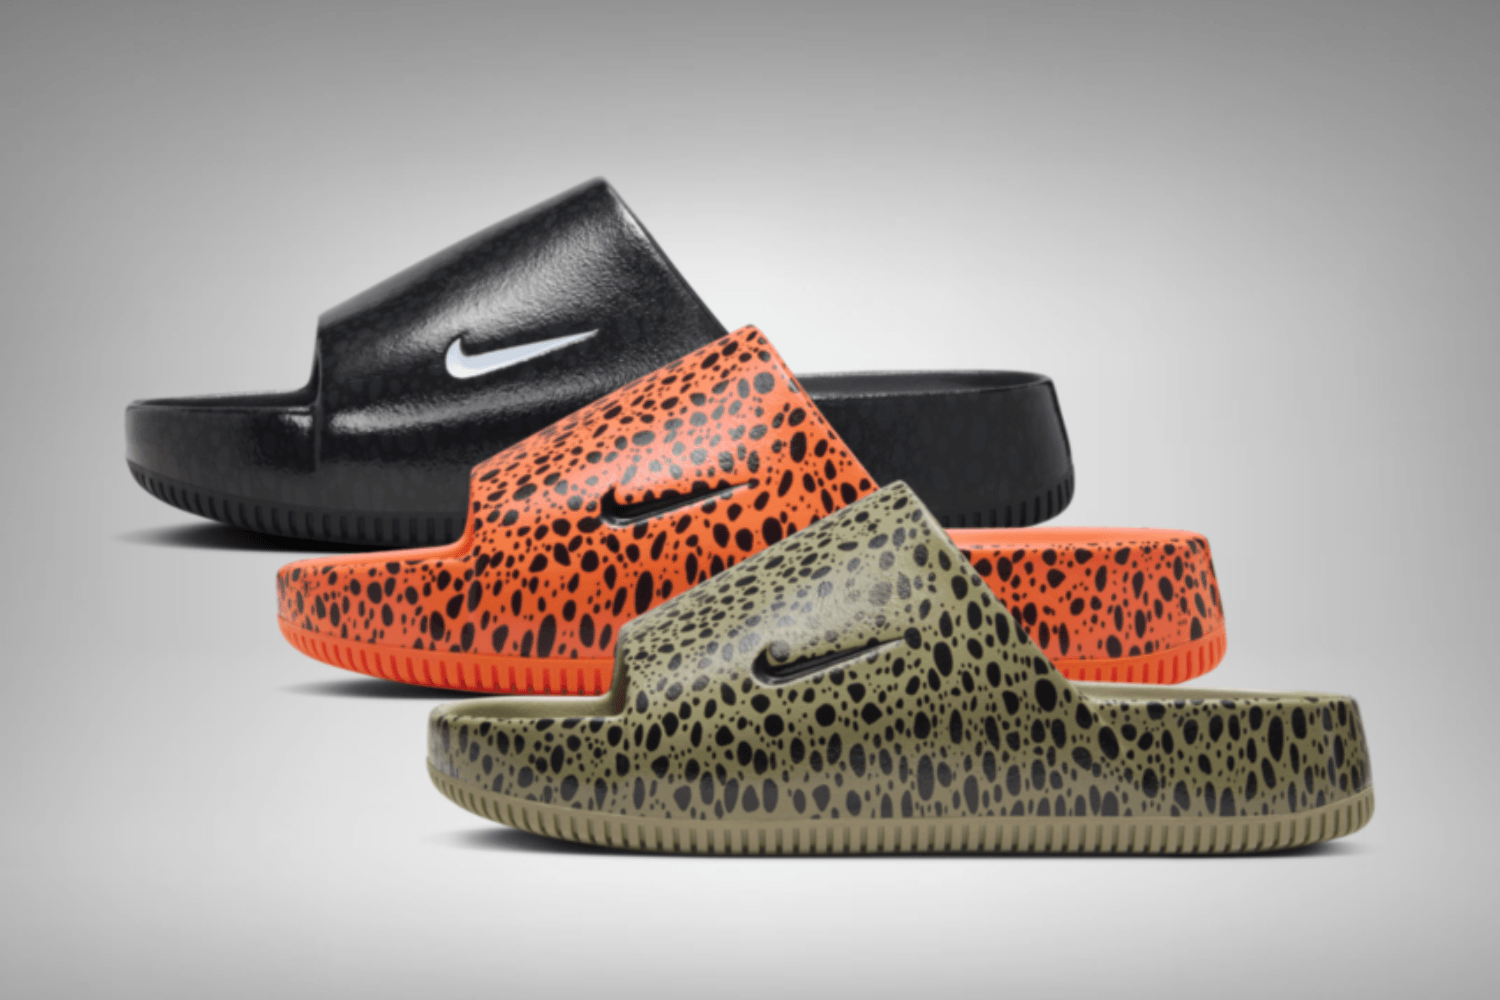 De Nike Calm Slide krijgt een 'Safari Print' pack